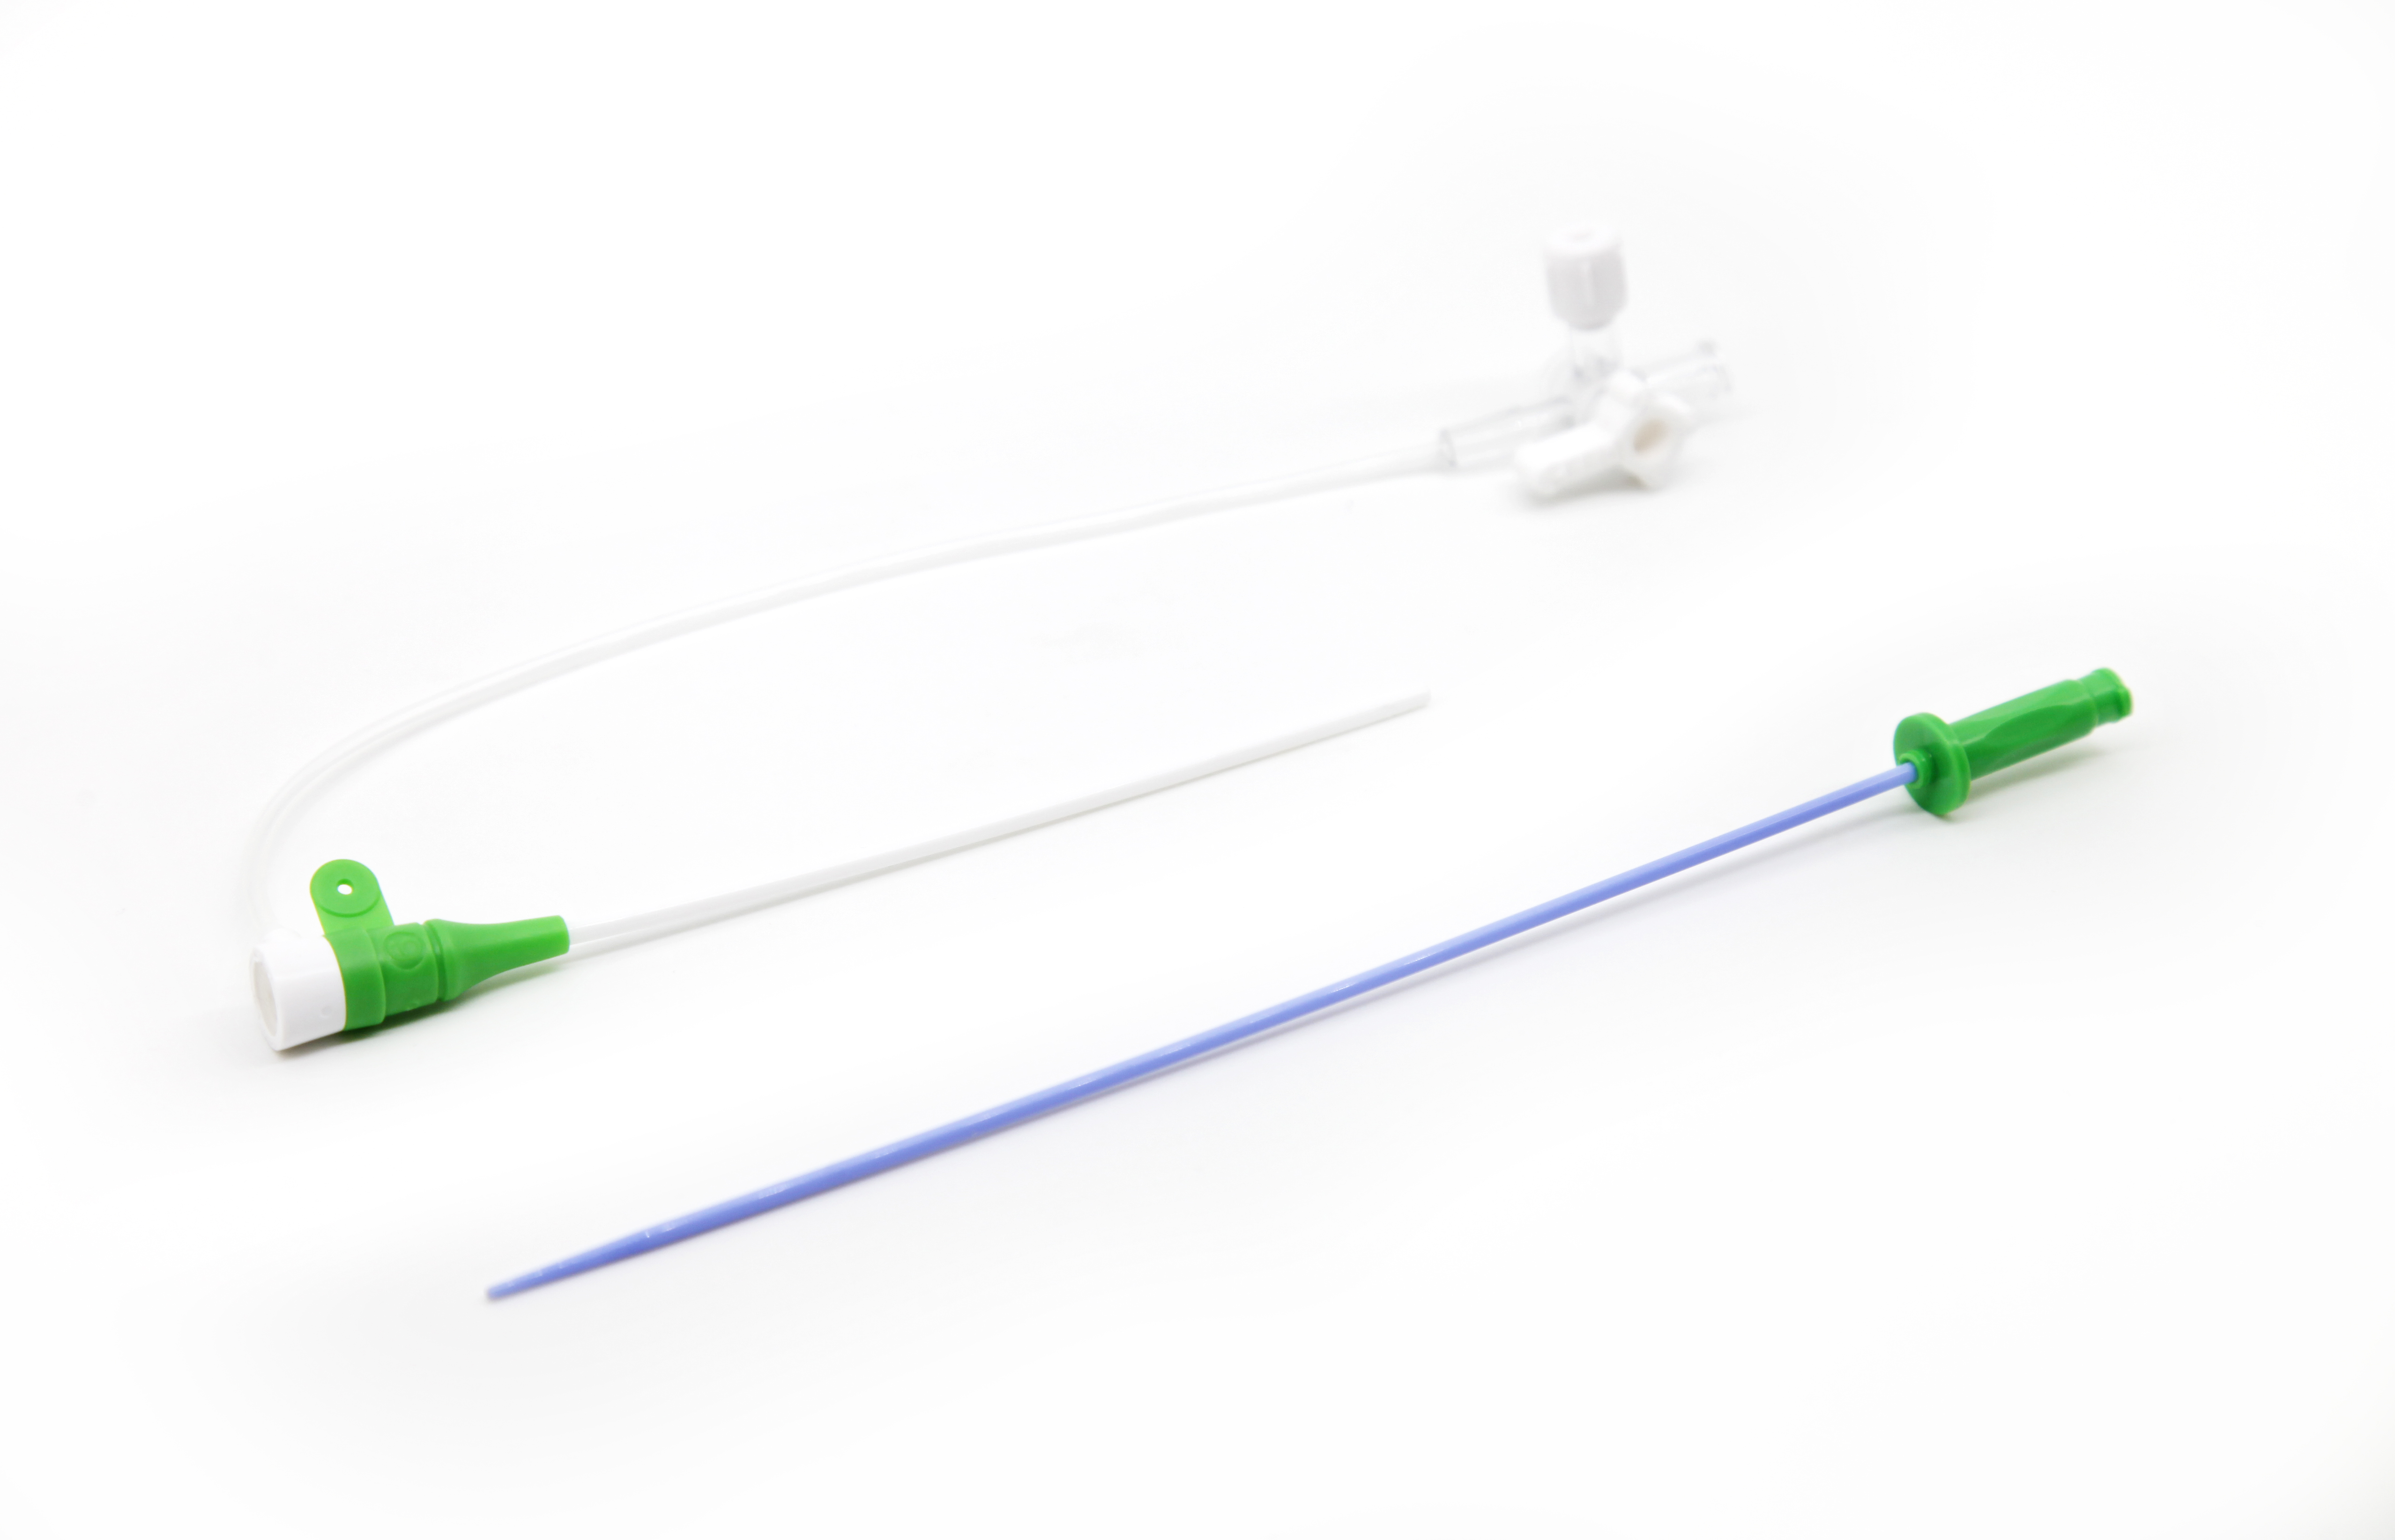 Disposable super slip catheter sheath Kit